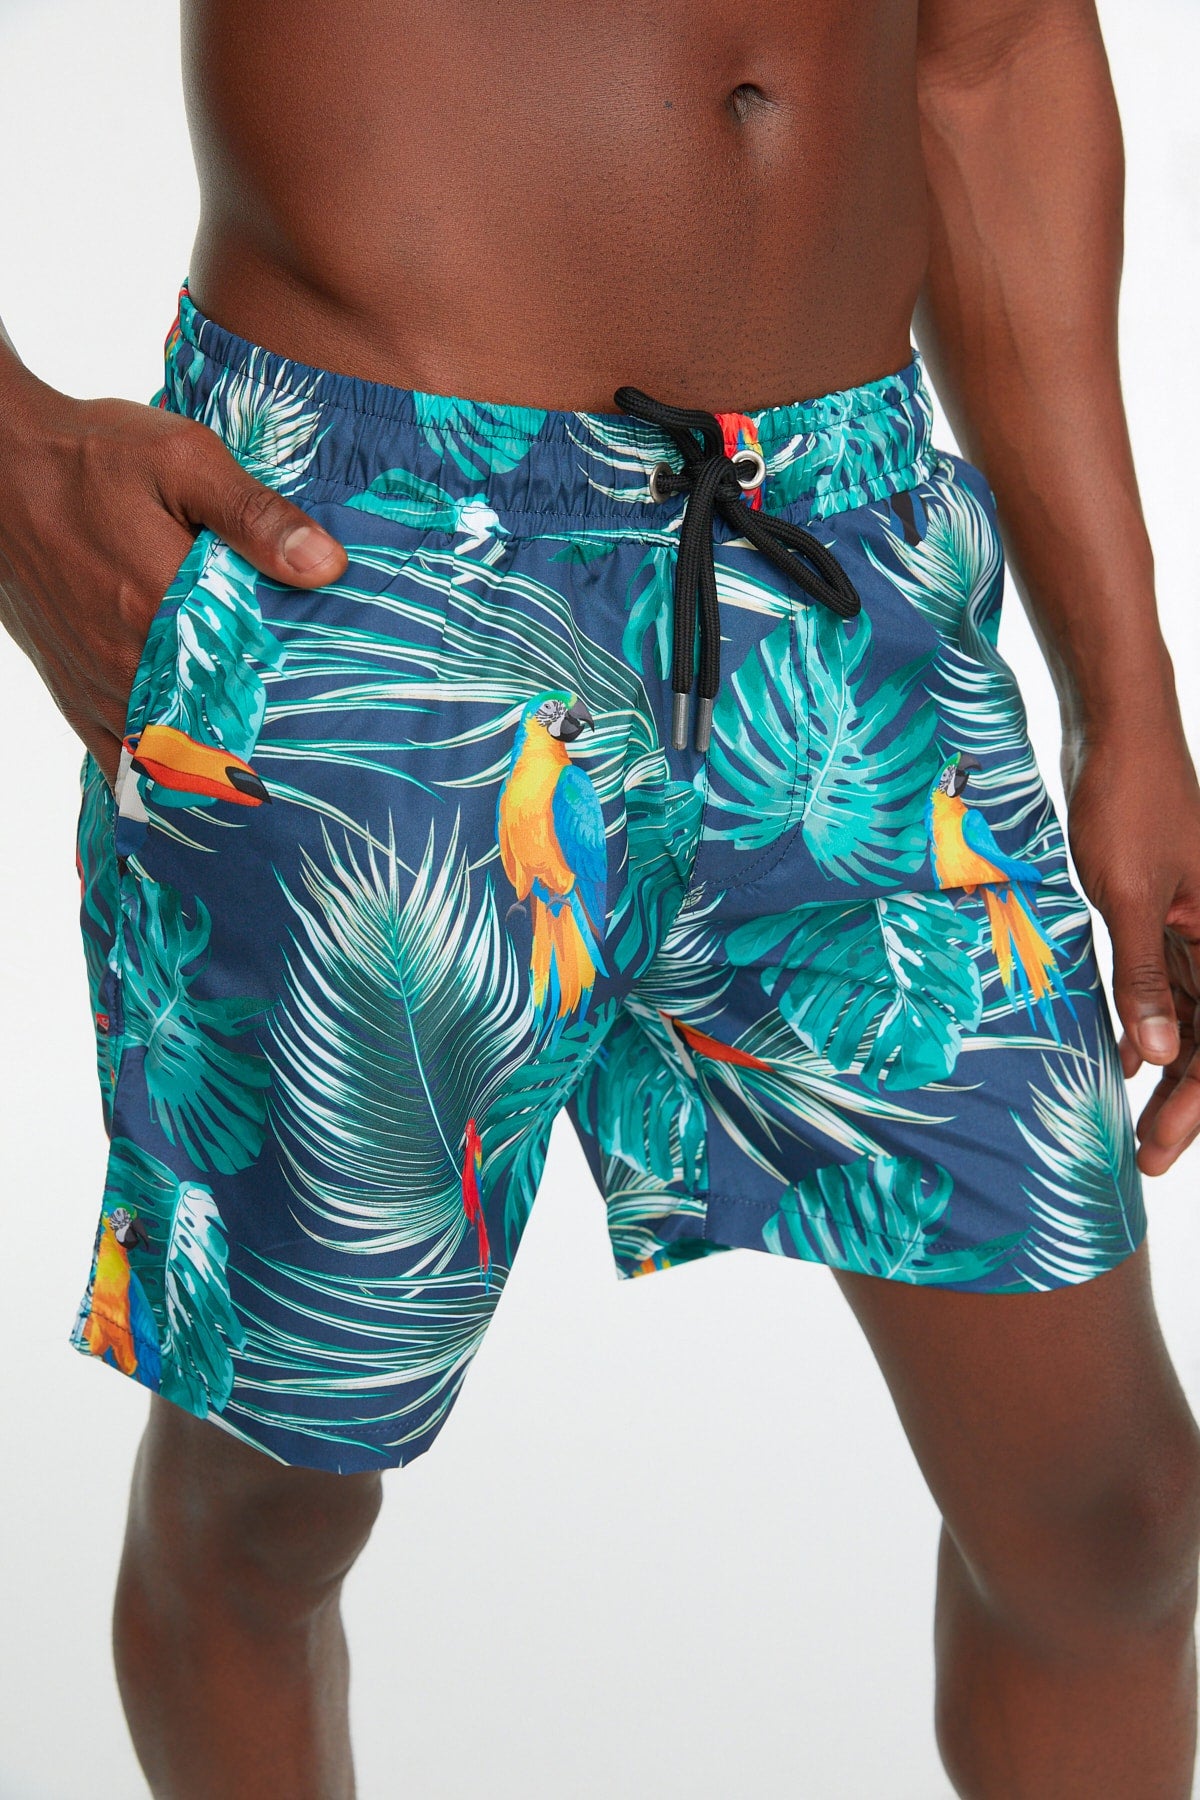 Multicolored Men's Tropical Printed Standard Swimwear Marine Shorts